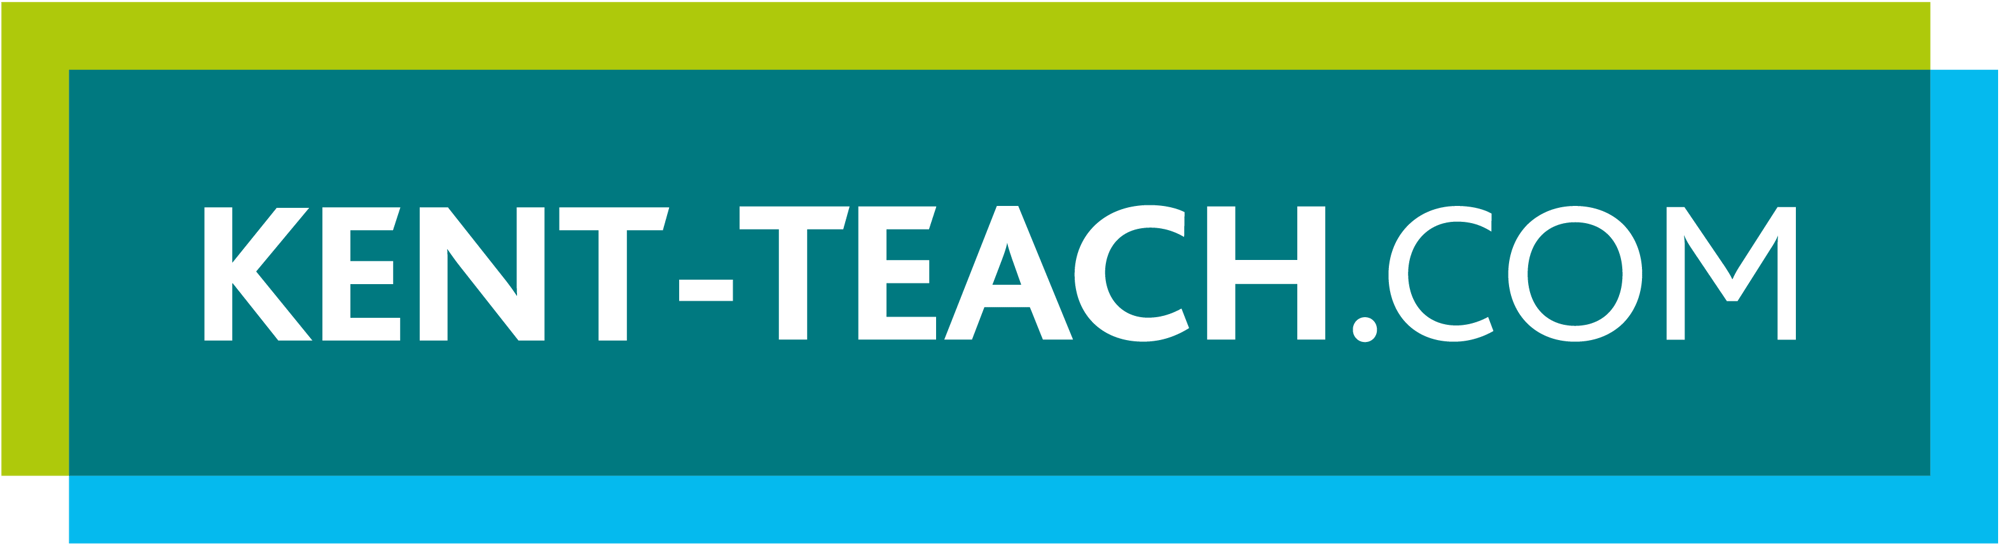 Kent Teach Logo H206px-01